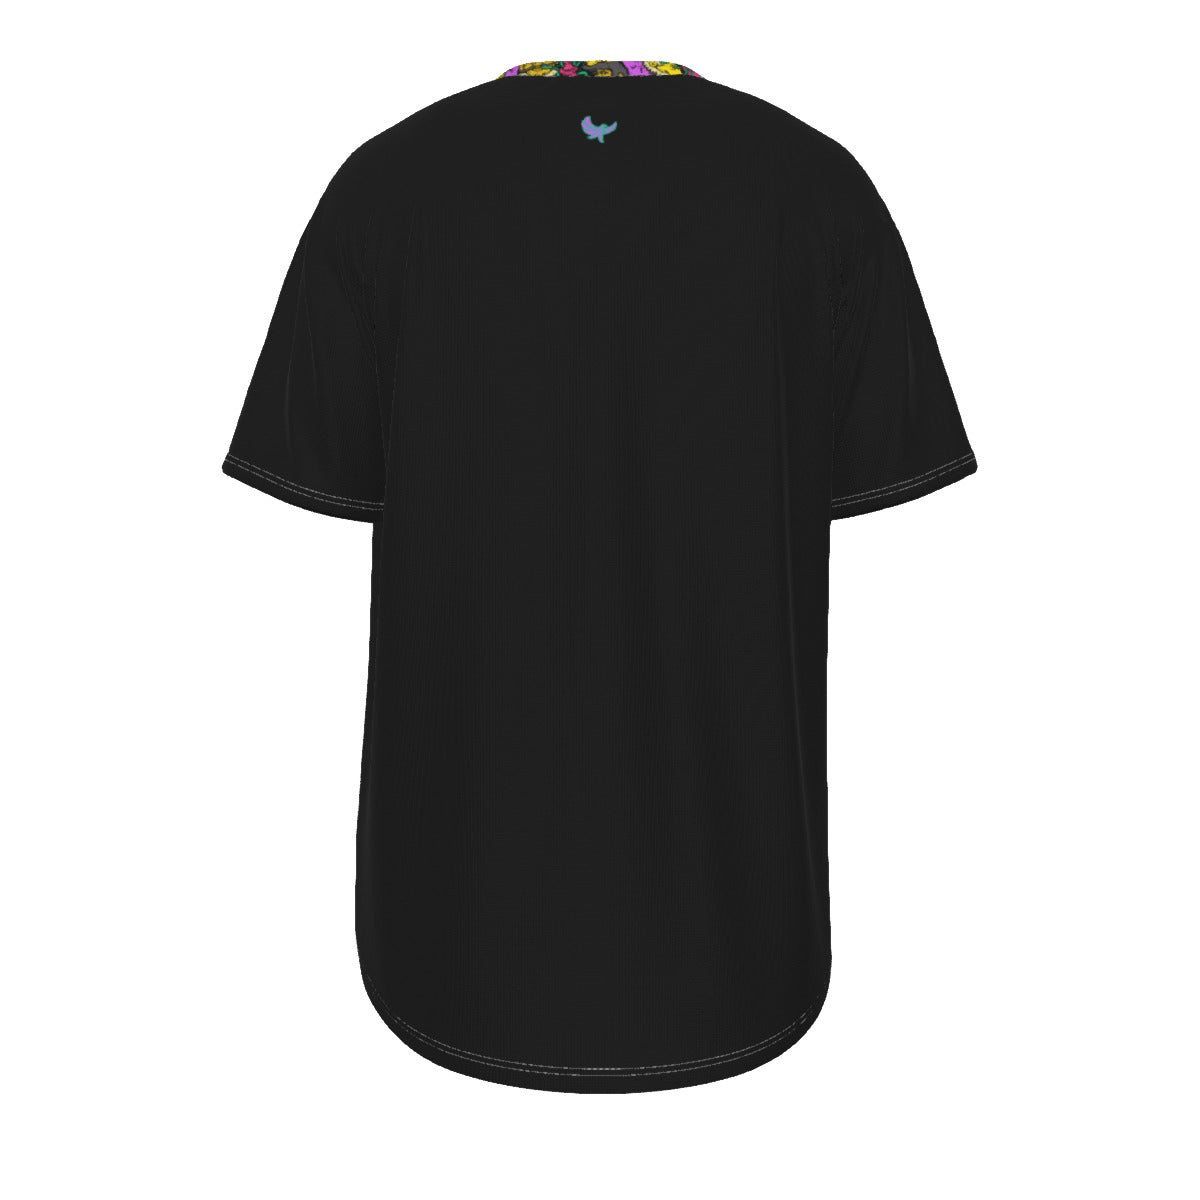 PEACEGANG "AHIMSA" Unisex Short Sleeve T-shirt